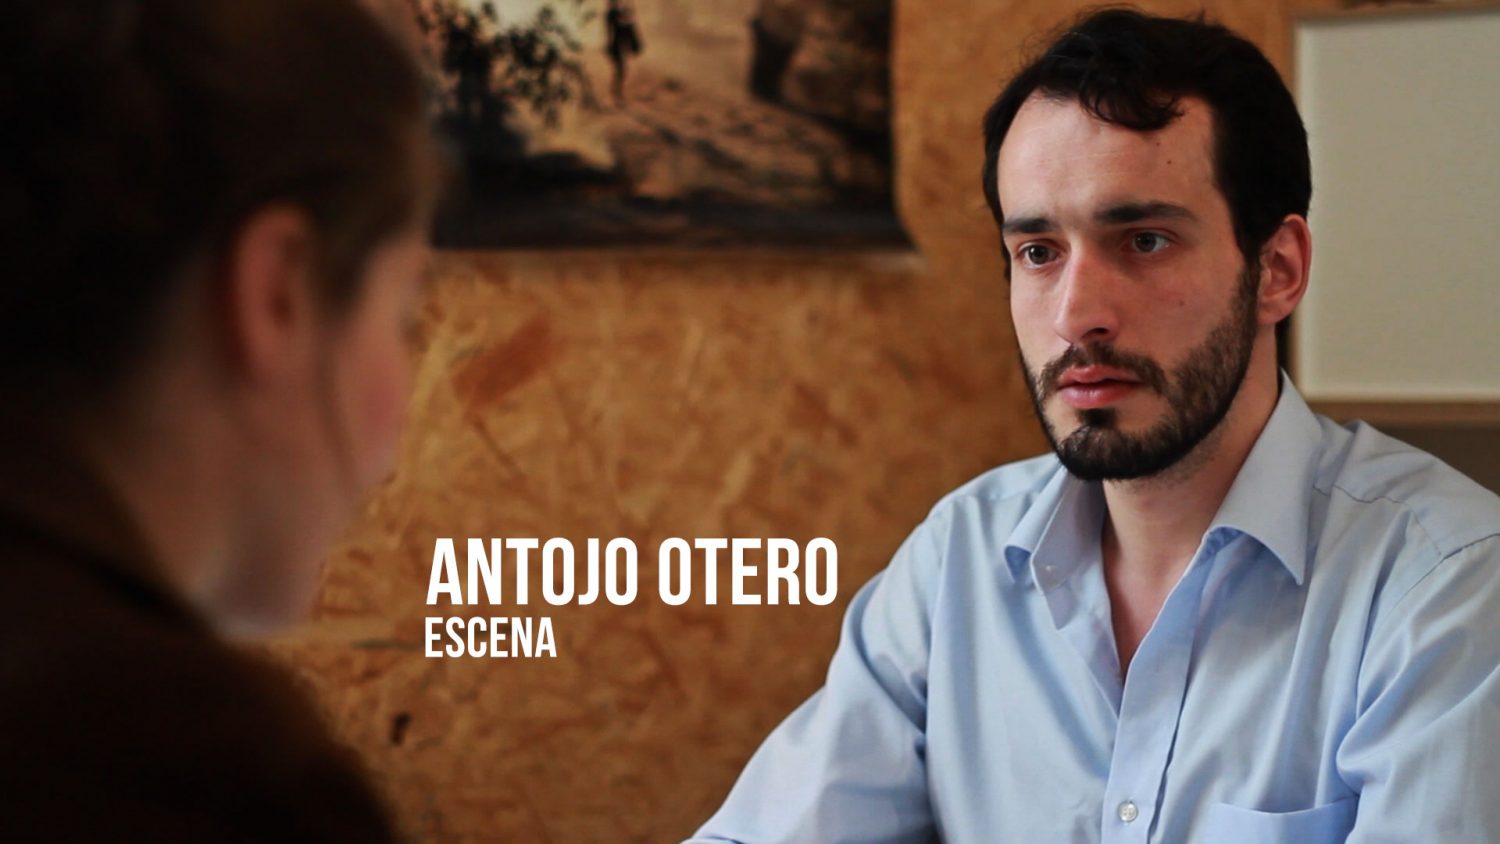 AntojO Otero - Escena Actor Drama